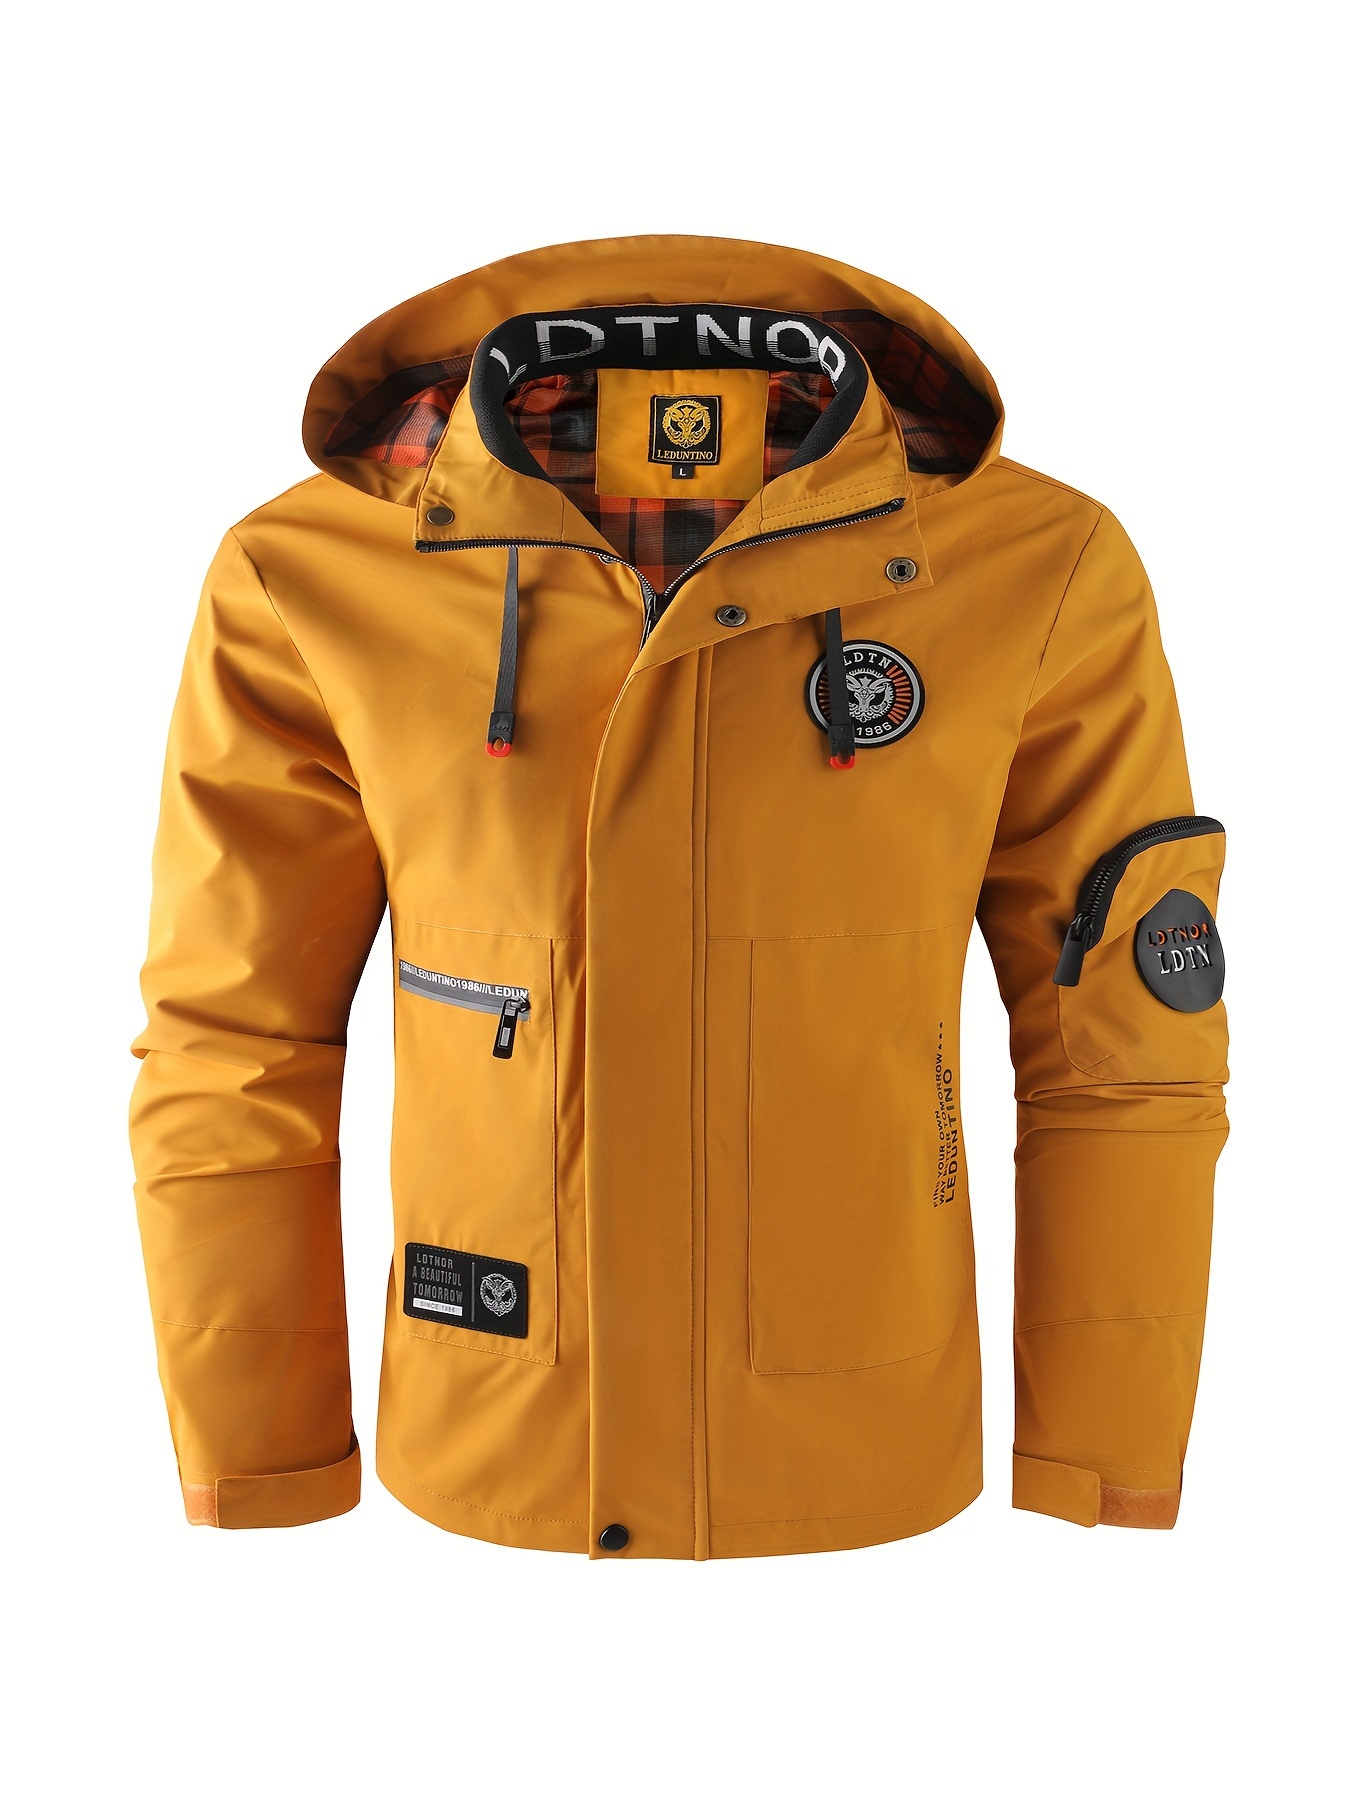 White Mountaineering geometric pattern half-zipped jacket - Brown